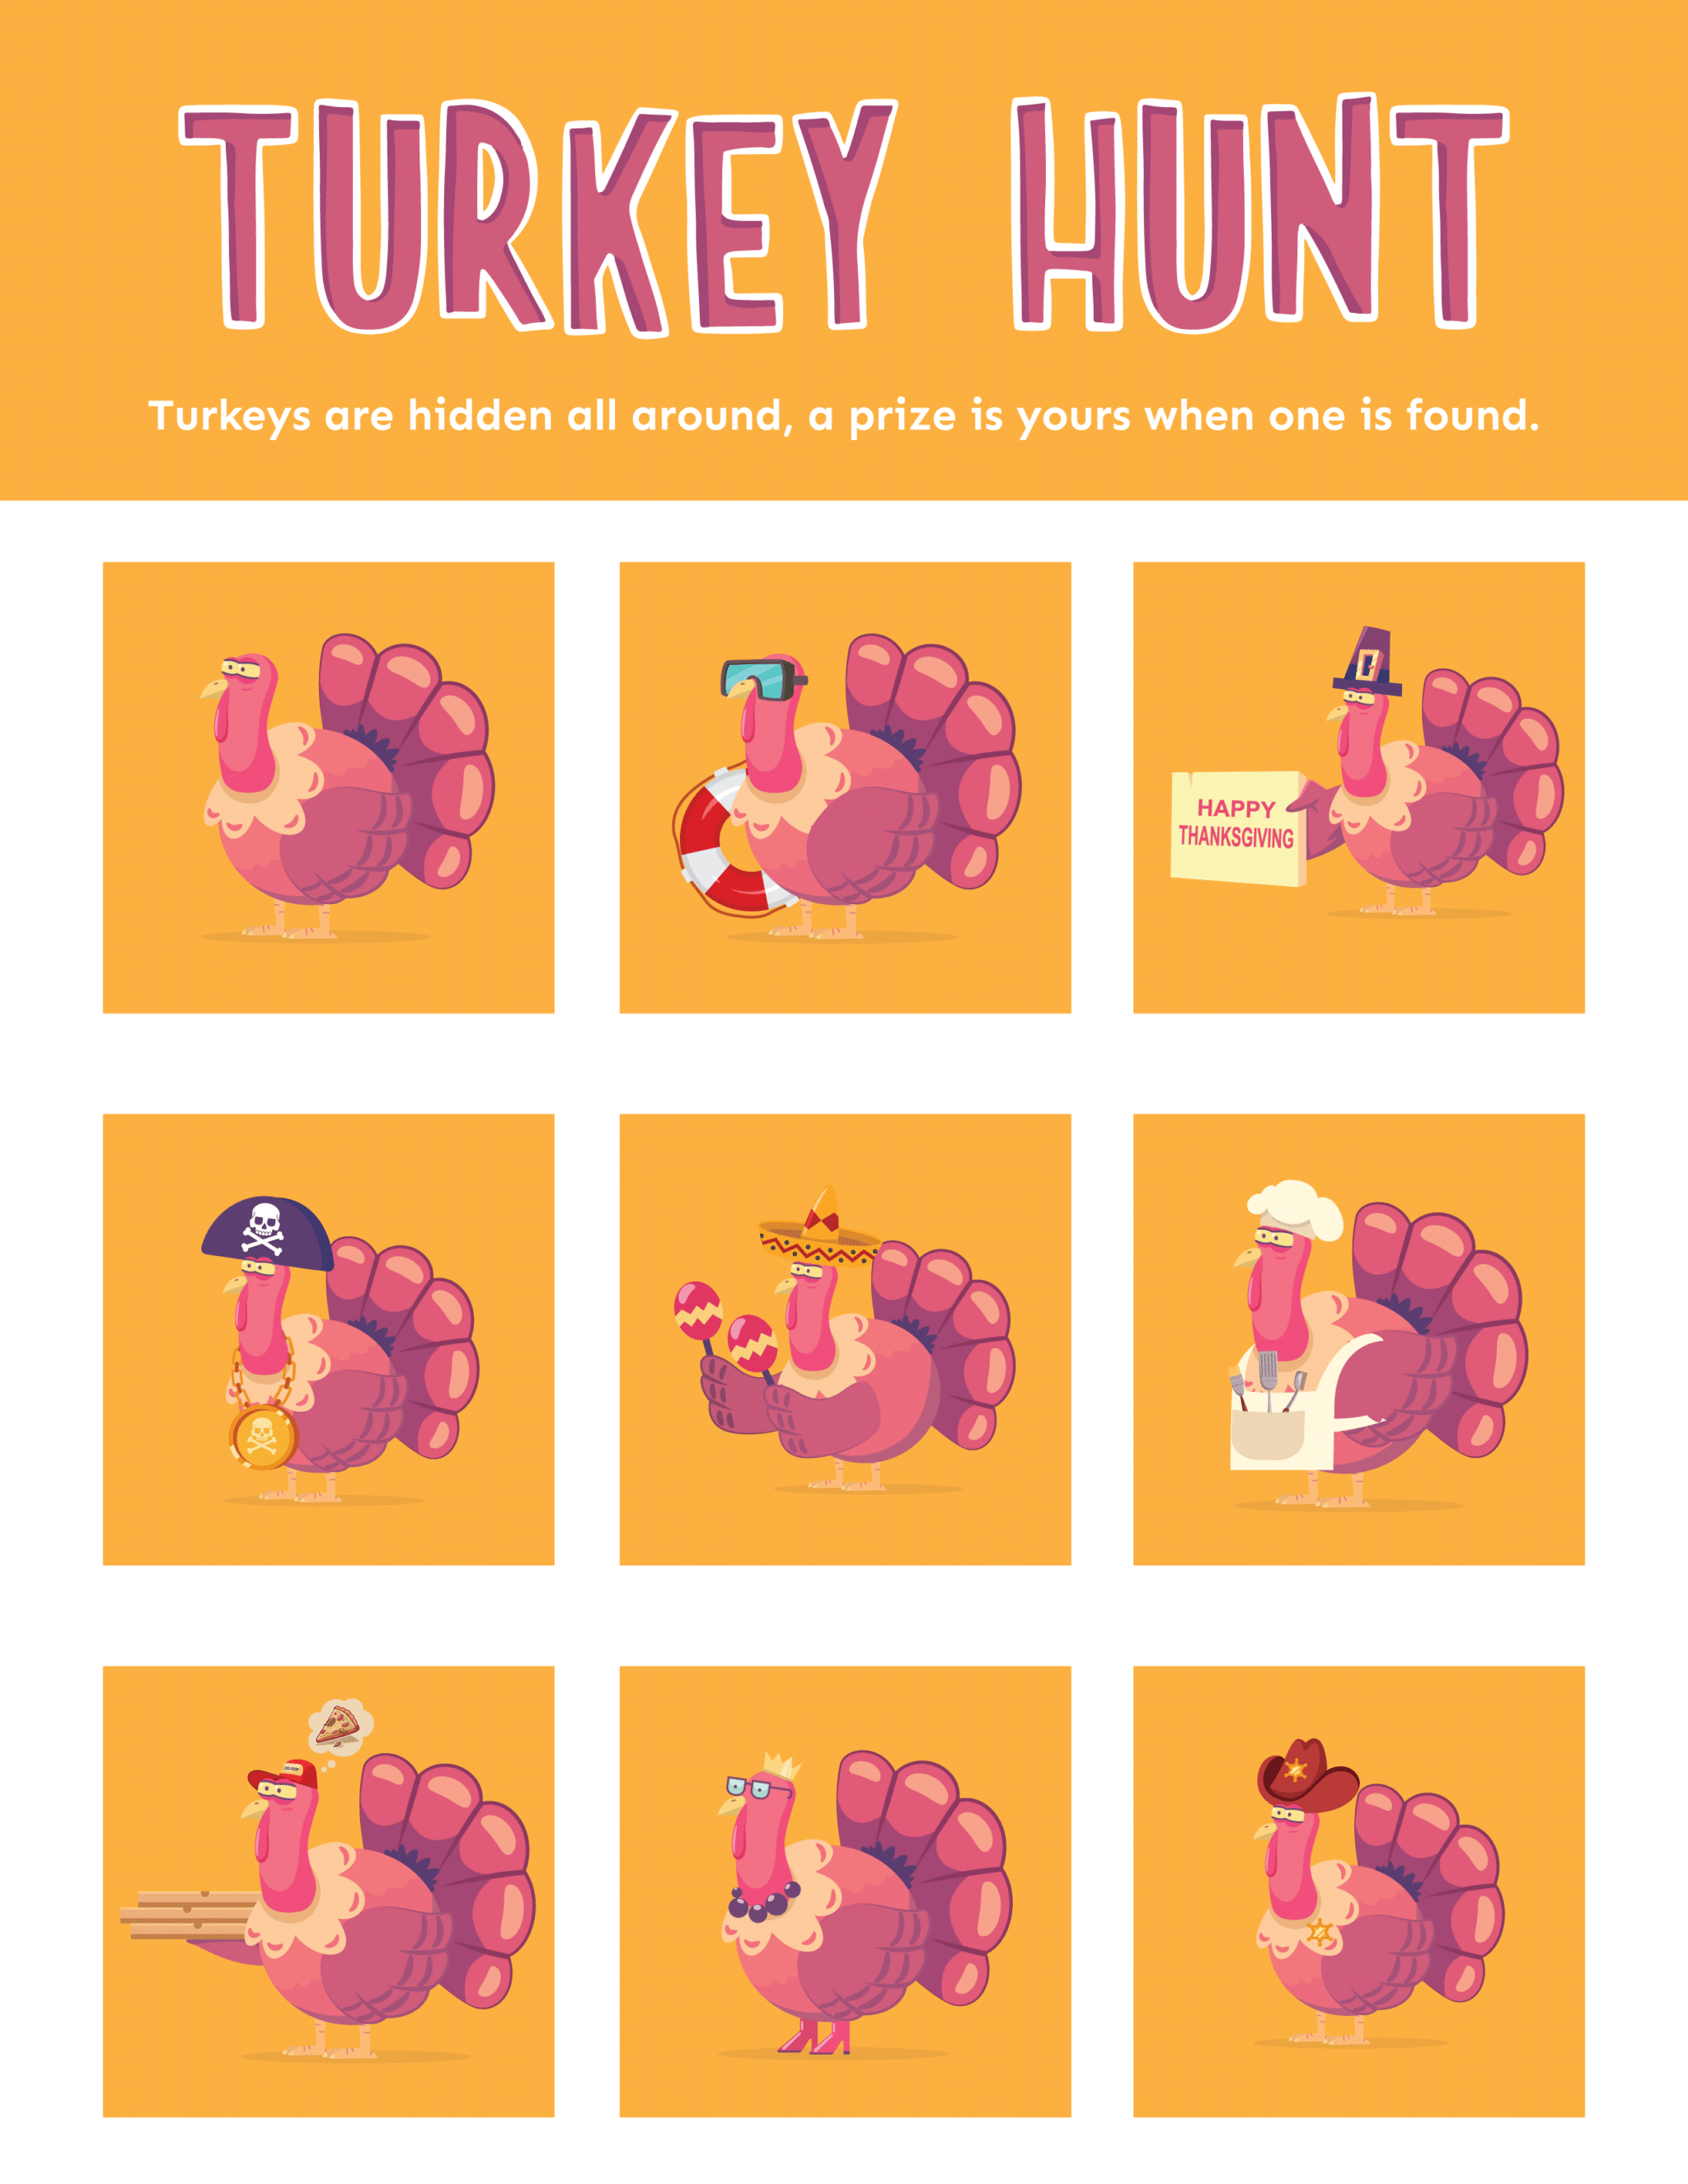 A sheet of turkey hunt cards